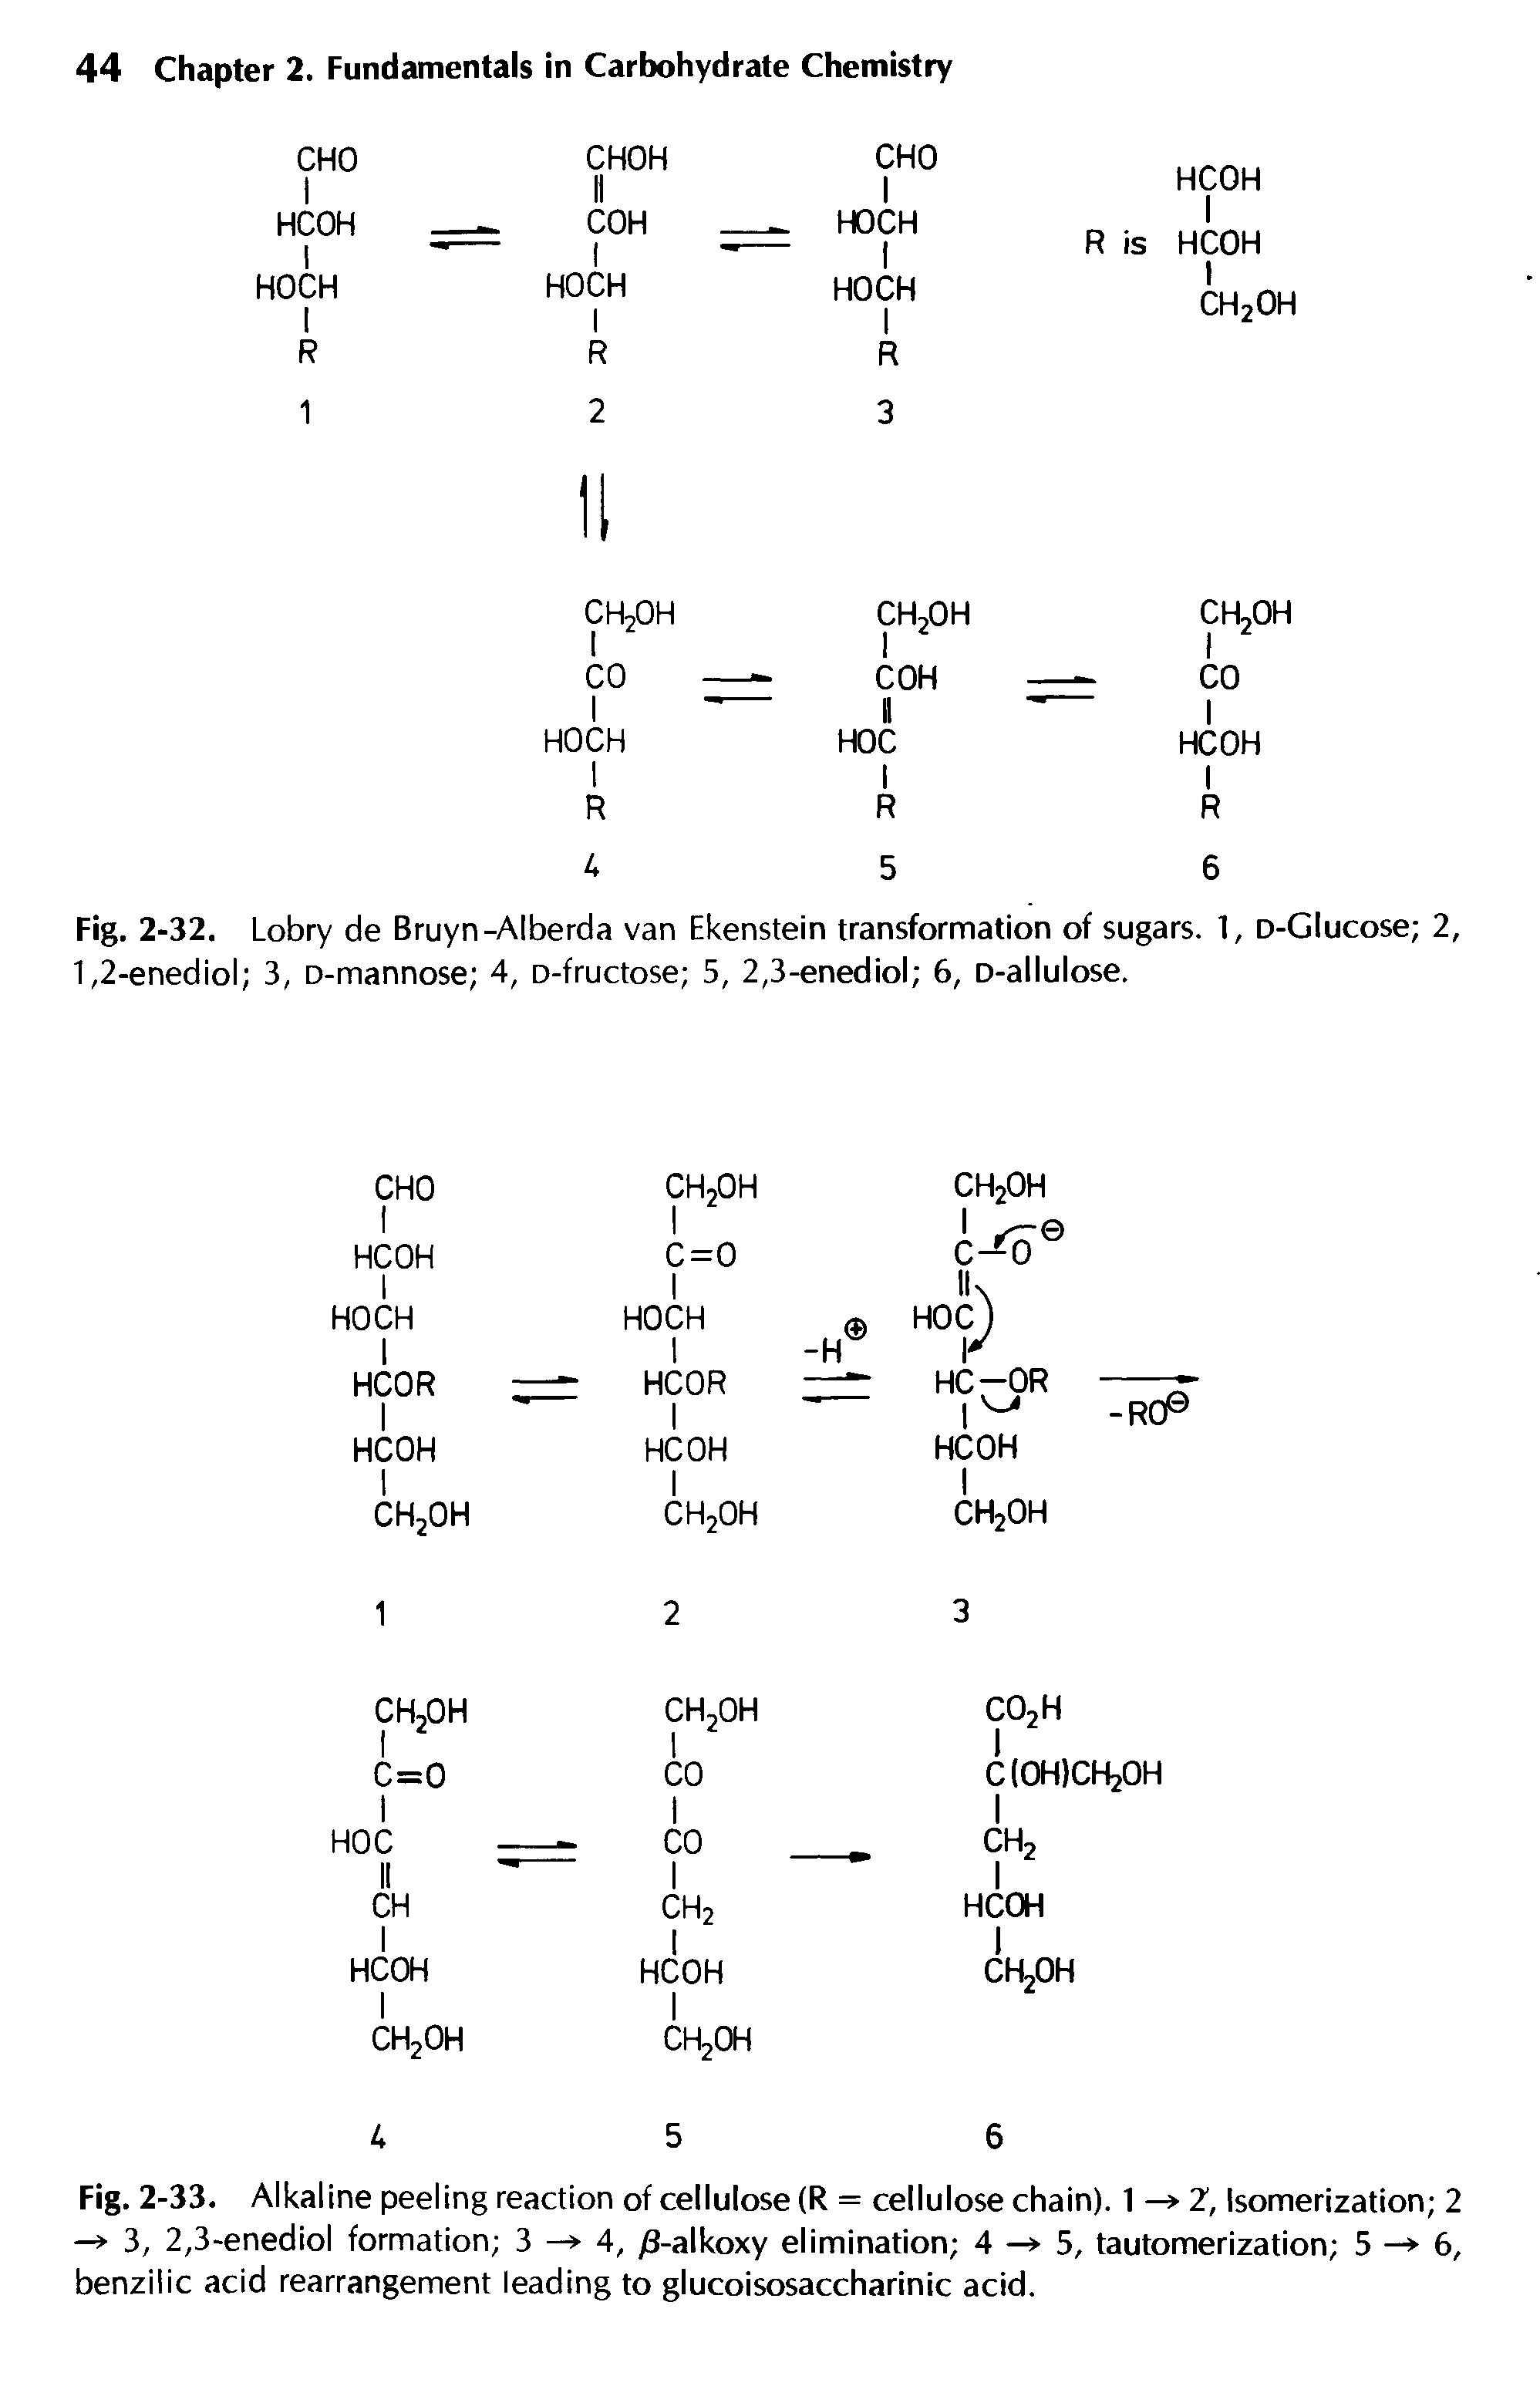 Fig. 2-33. Alkaline peeling reaction of cellulose (R = cellulose chain). 1 — 2, Isomerization 2 — 3, 2,3-enediol formation 3 — 4, j3-alkoxy elimination 4 —> 5, tautomerization 5 — 6, benzilic acid rearrangement leading to glucoisosaccharinic acid.